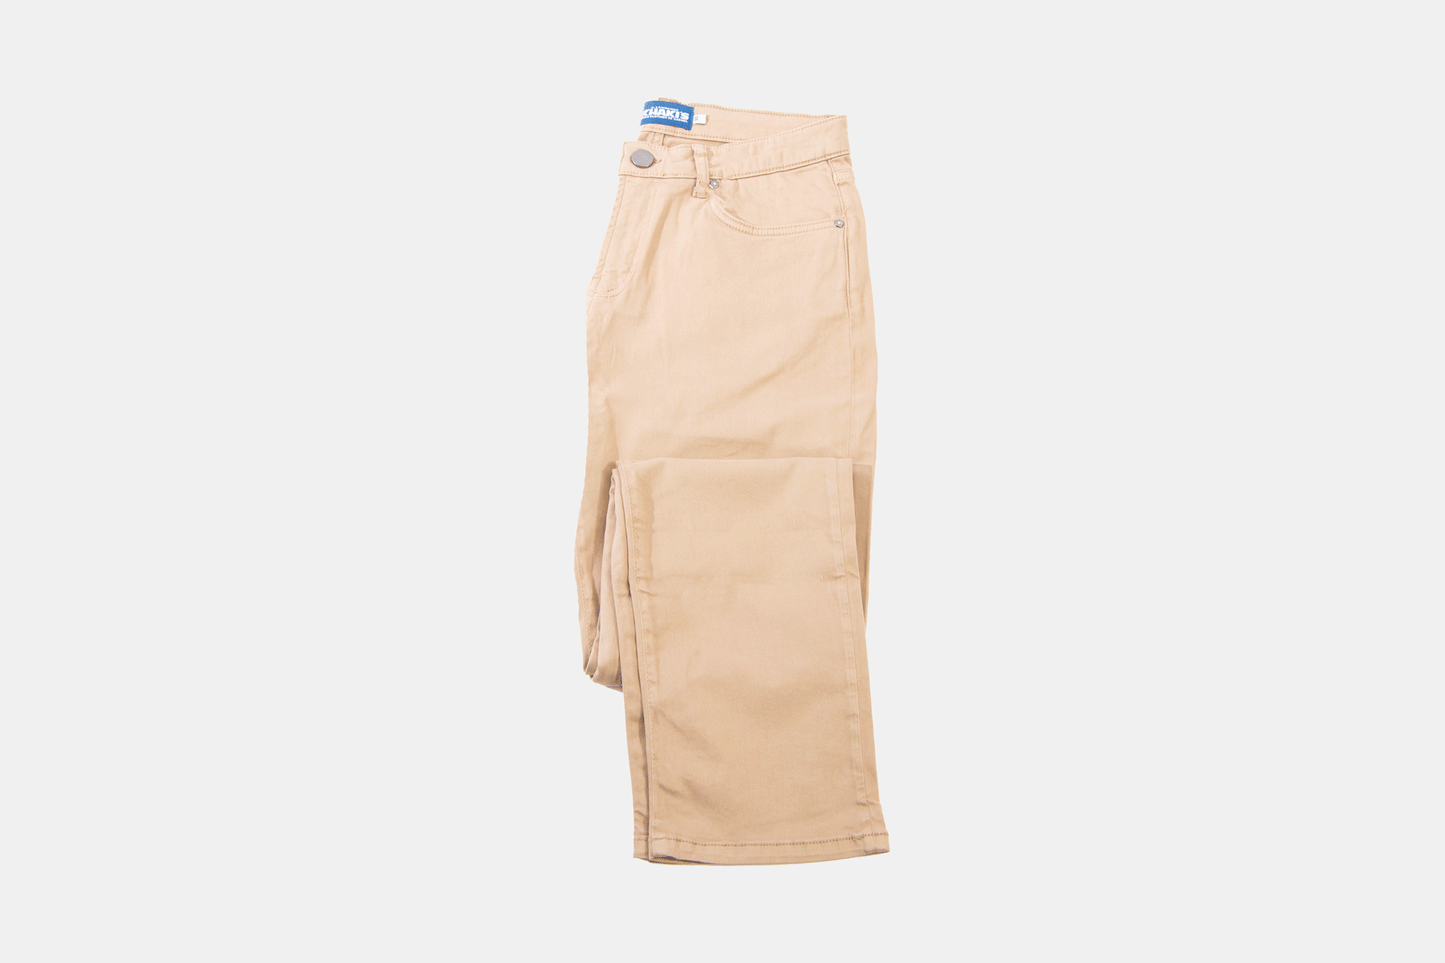 khakis of Carmel - caramel colored pants